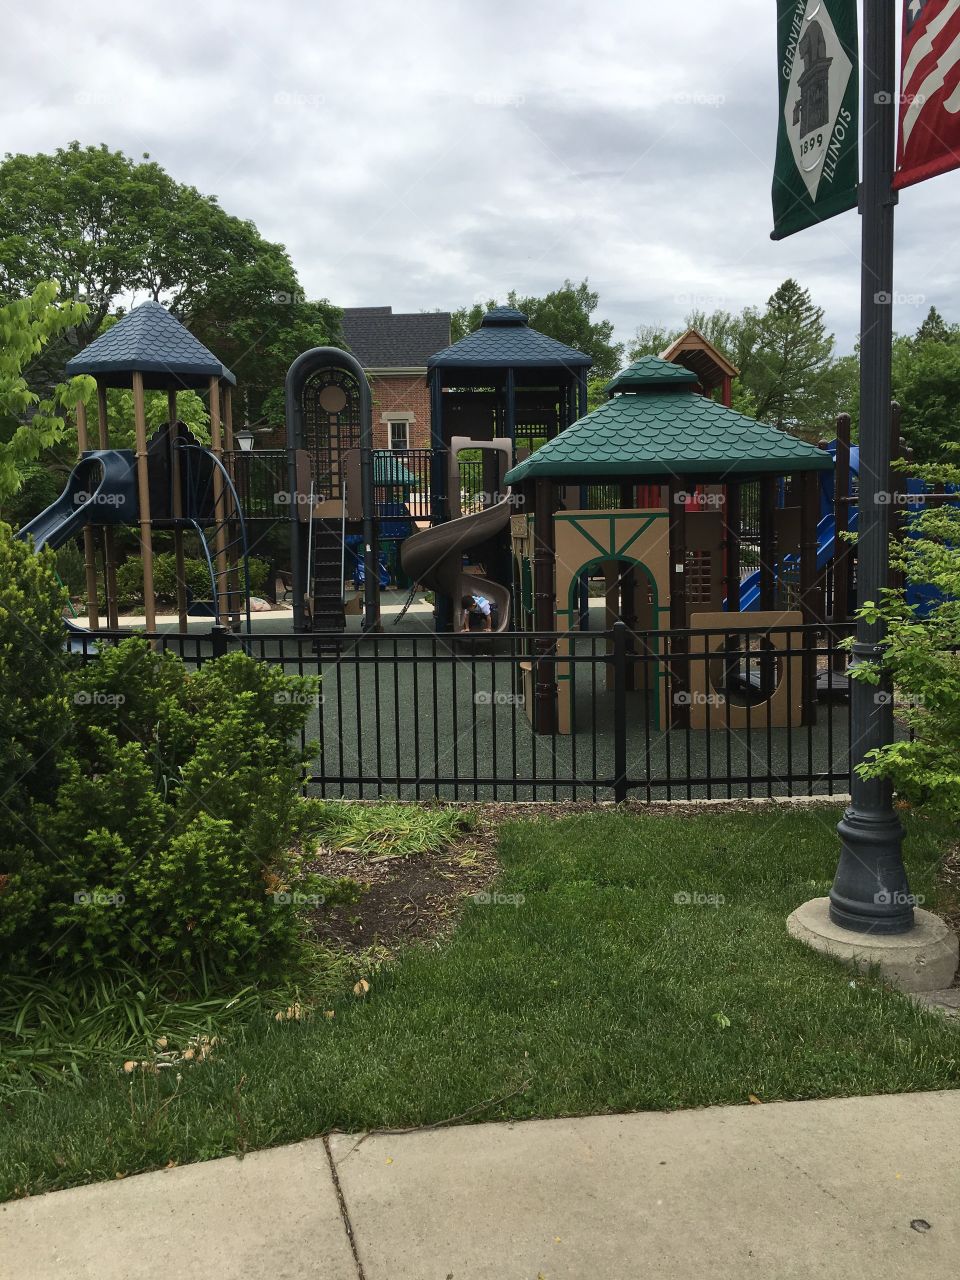 Kids park